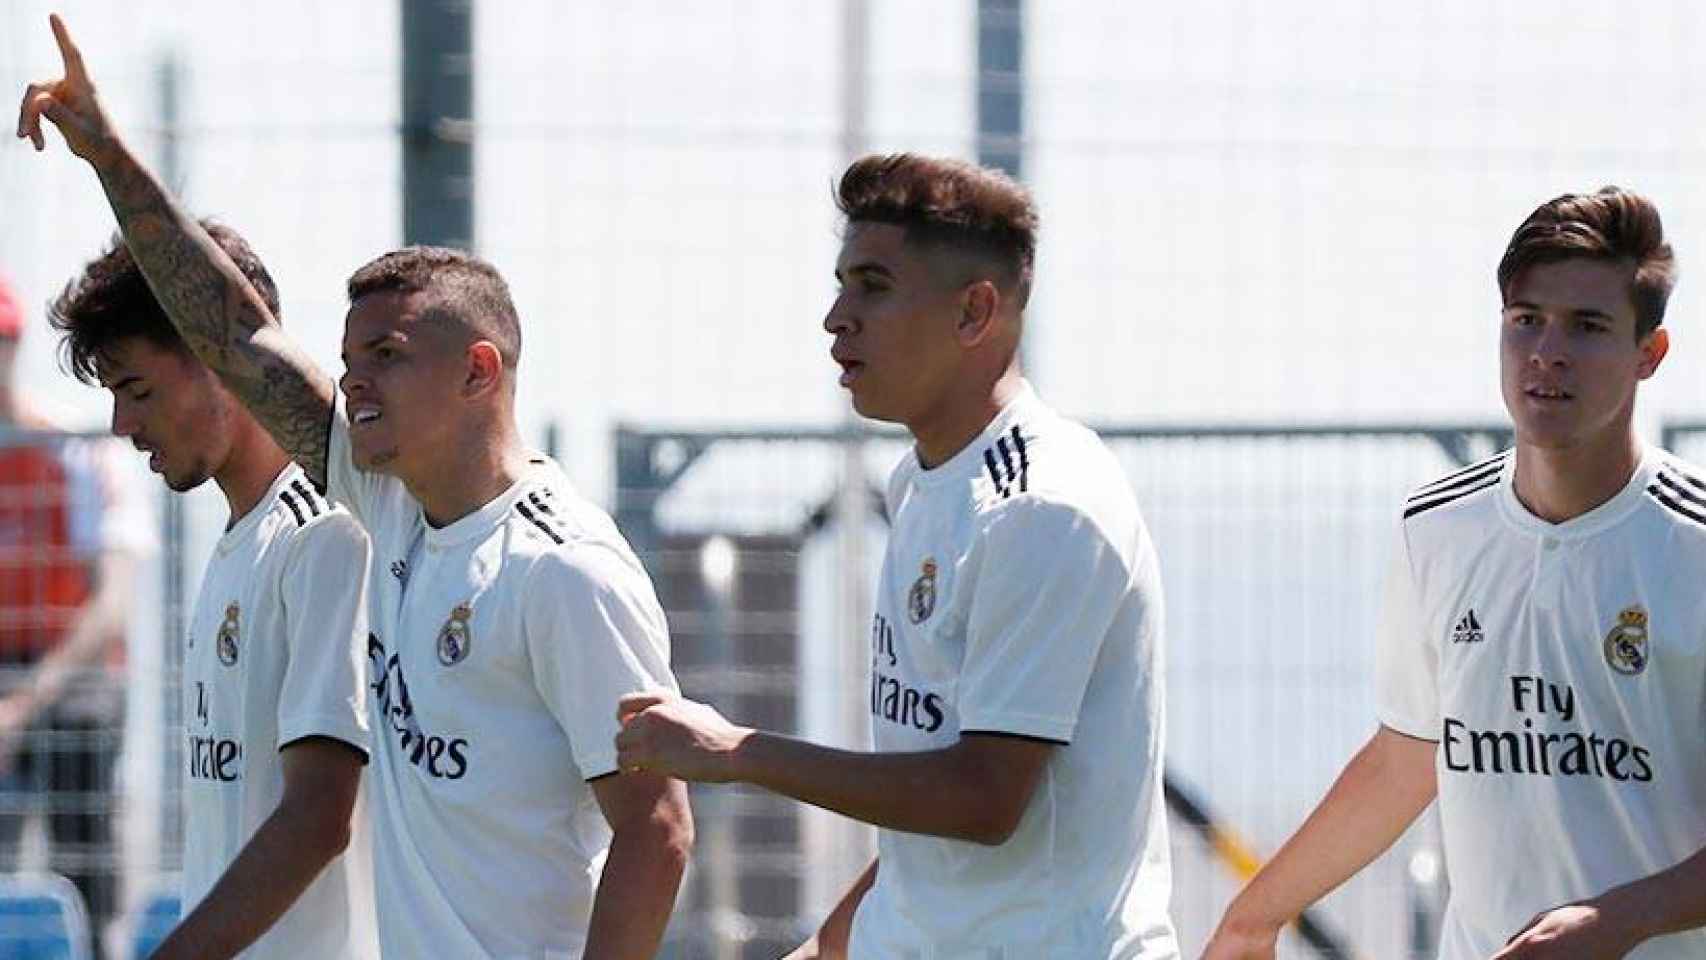 El Juvenil A celebra un gol ante el Tenerife